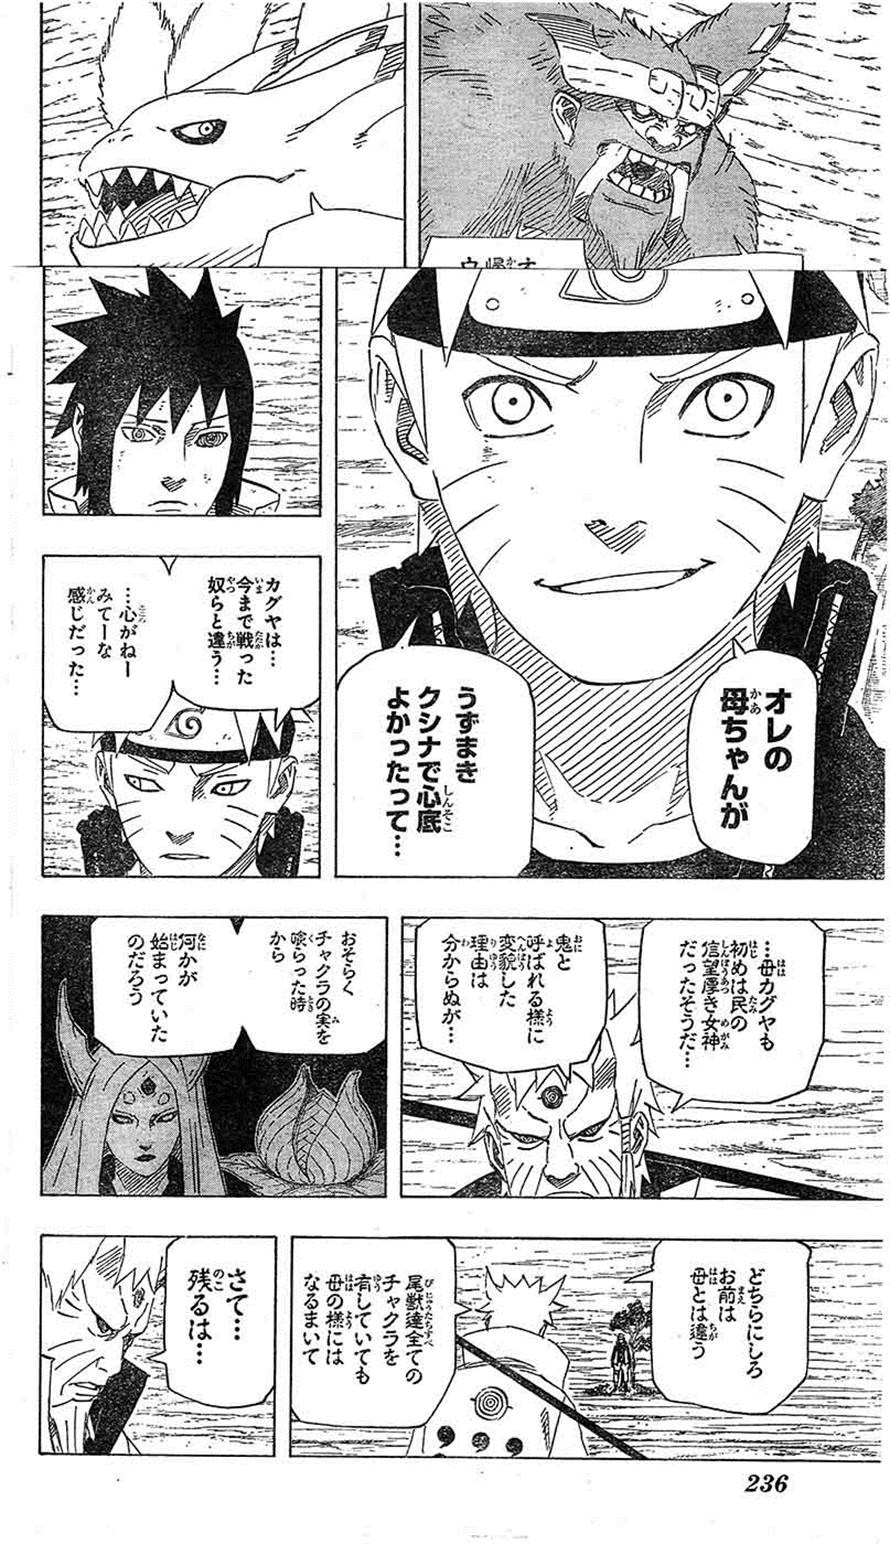 Naruto - Chapter 692 - Page 4